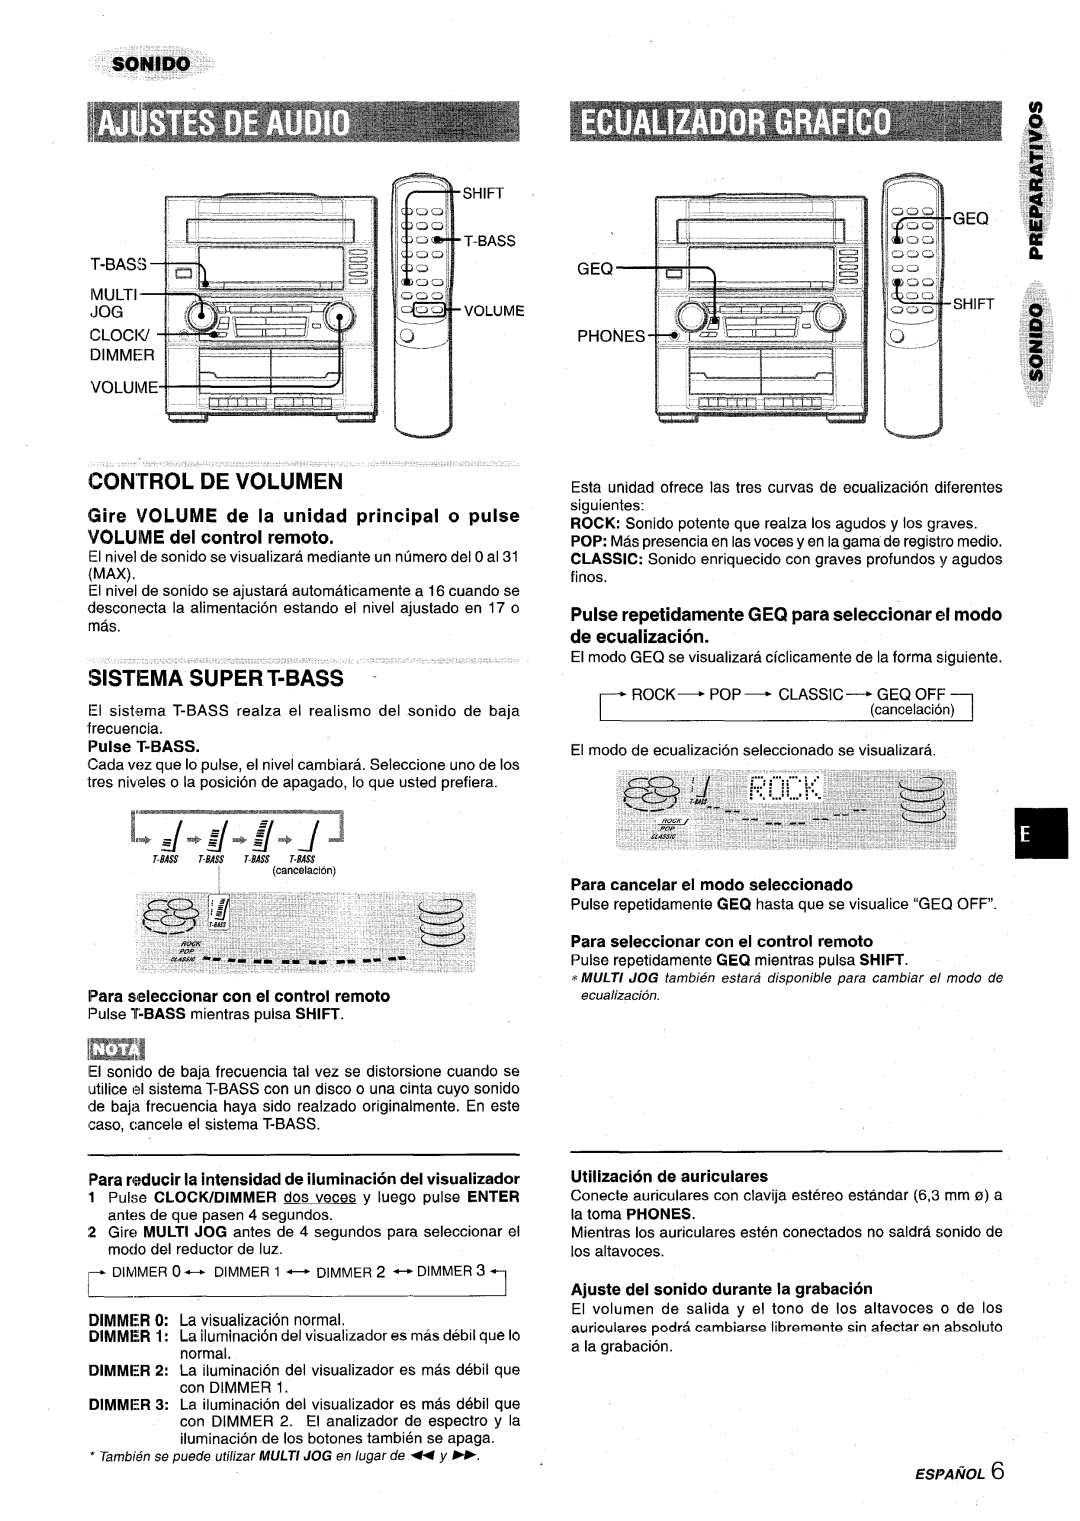 Aiwa XR-M75 Control De Volumen, Sistema Super T-Bass, Gire VOLUME de la unidad principal o pulse VOLUME del control remoto 